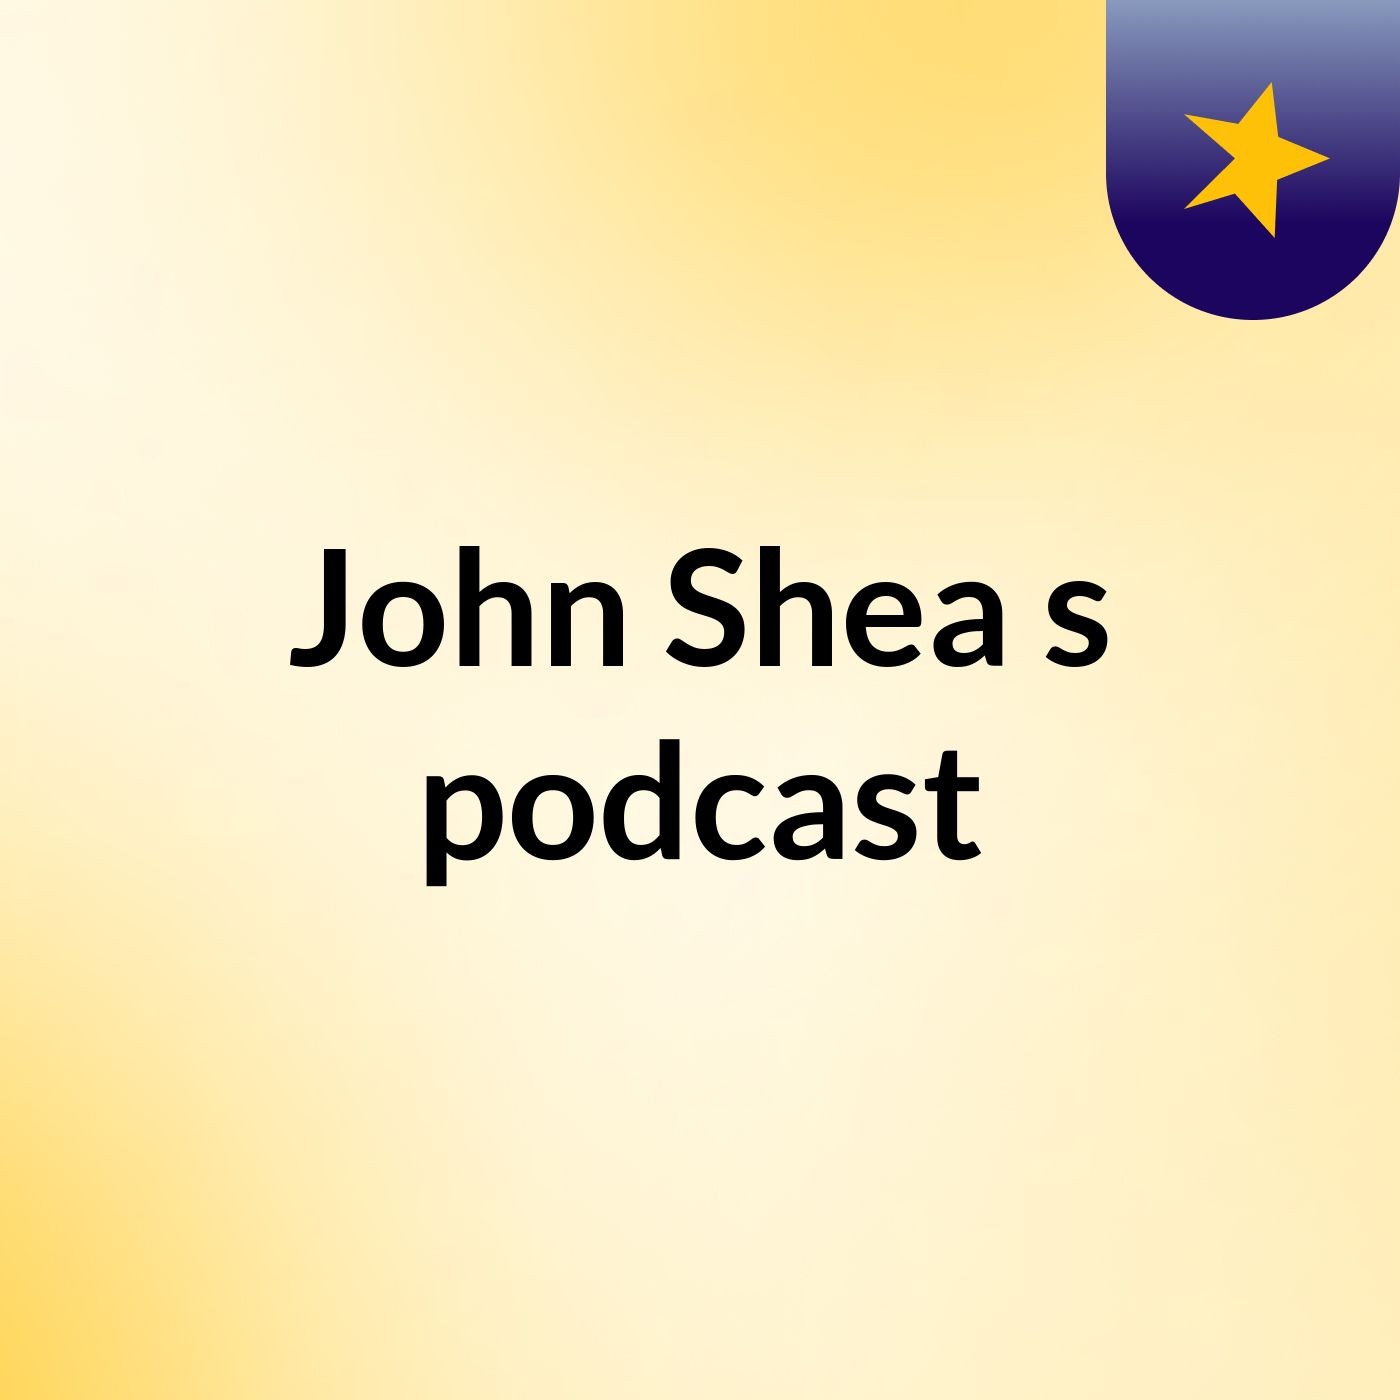 Episode 4 - John Shea's podcast